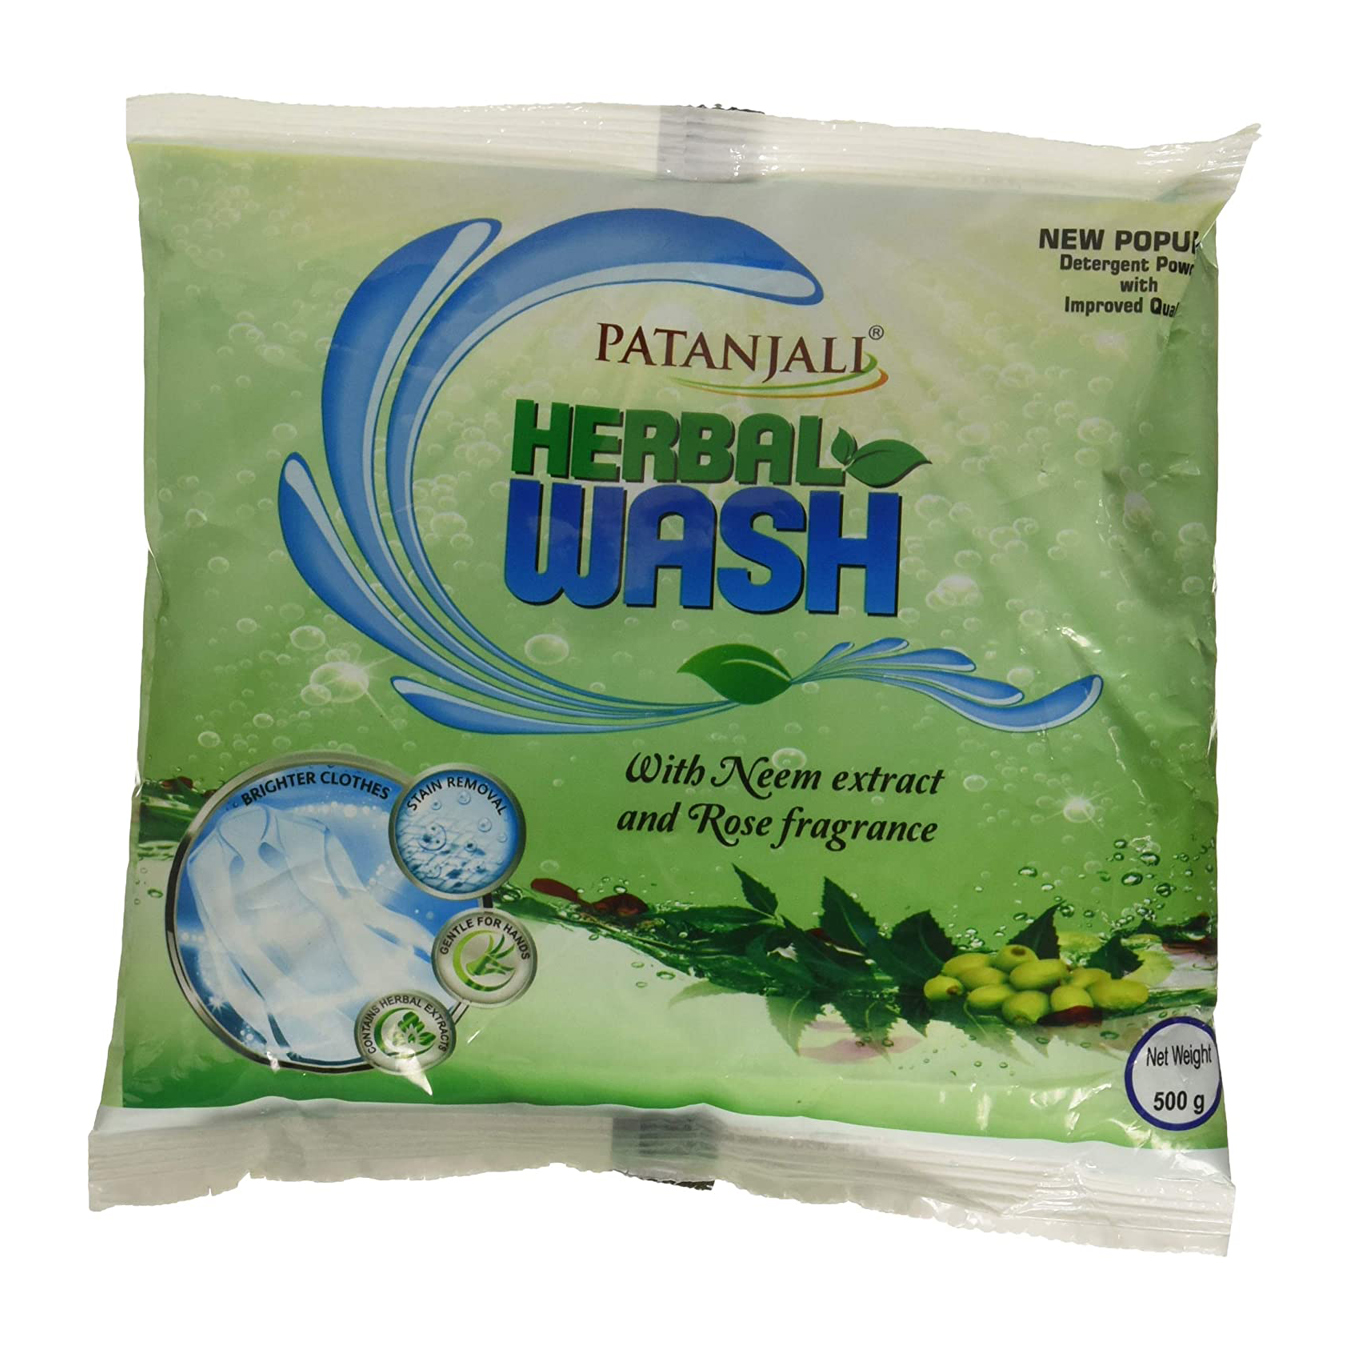 Patanjali Herbal Wash Detergent Powder - 500 g